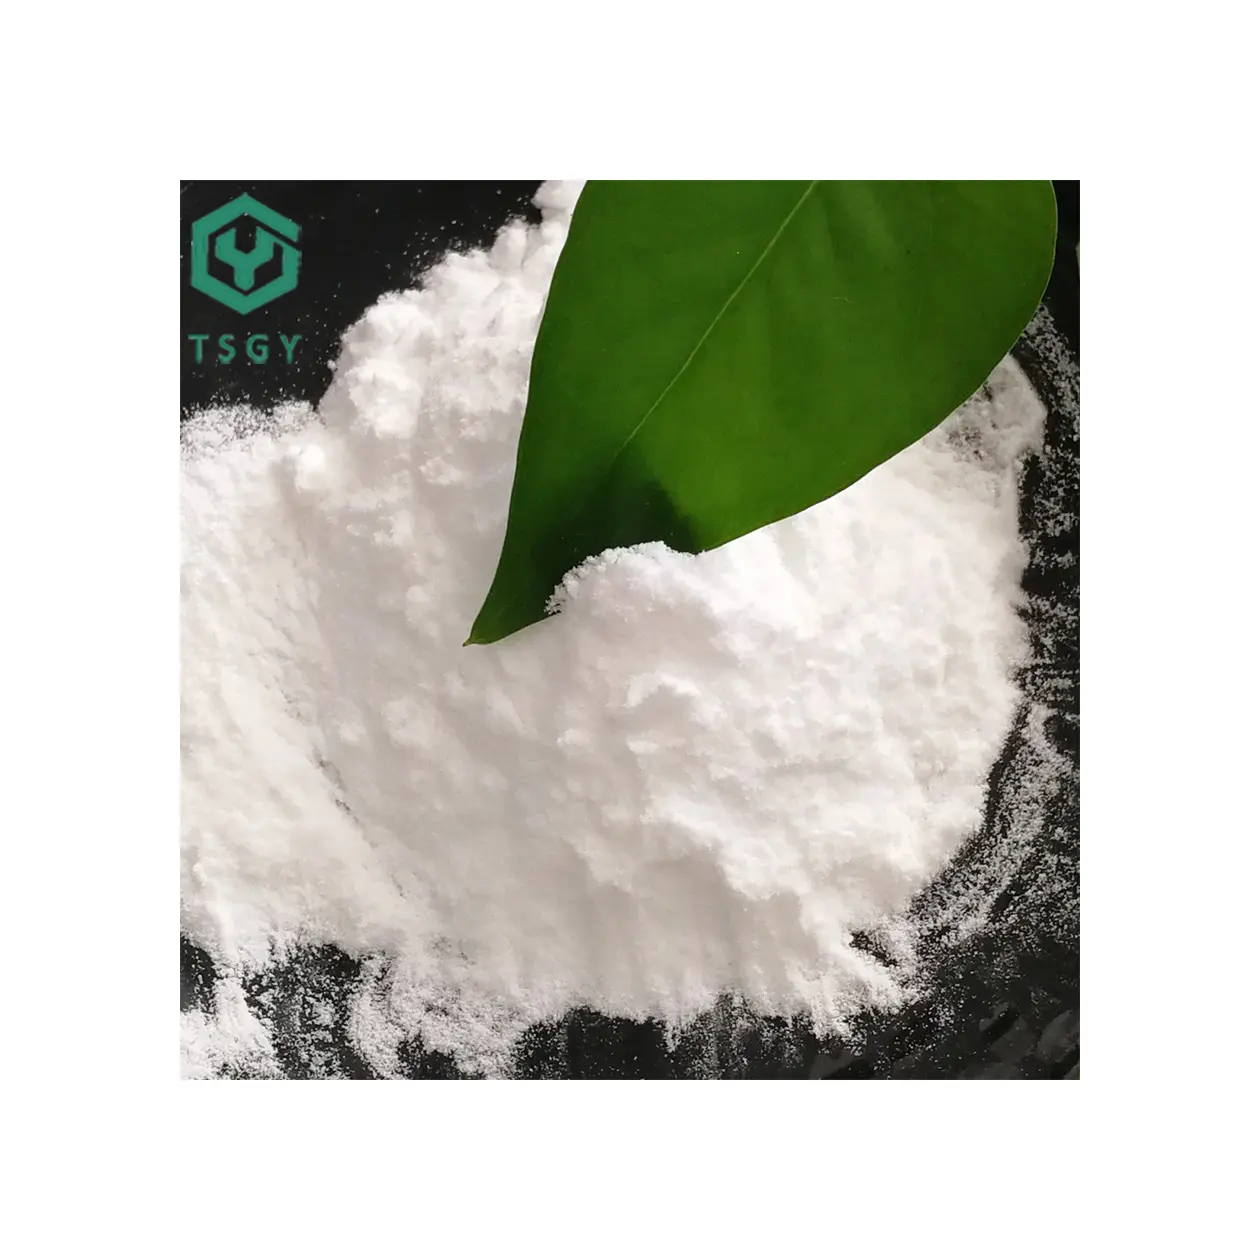 melamine urea formaldehyde glue powder in adhesives & sealants